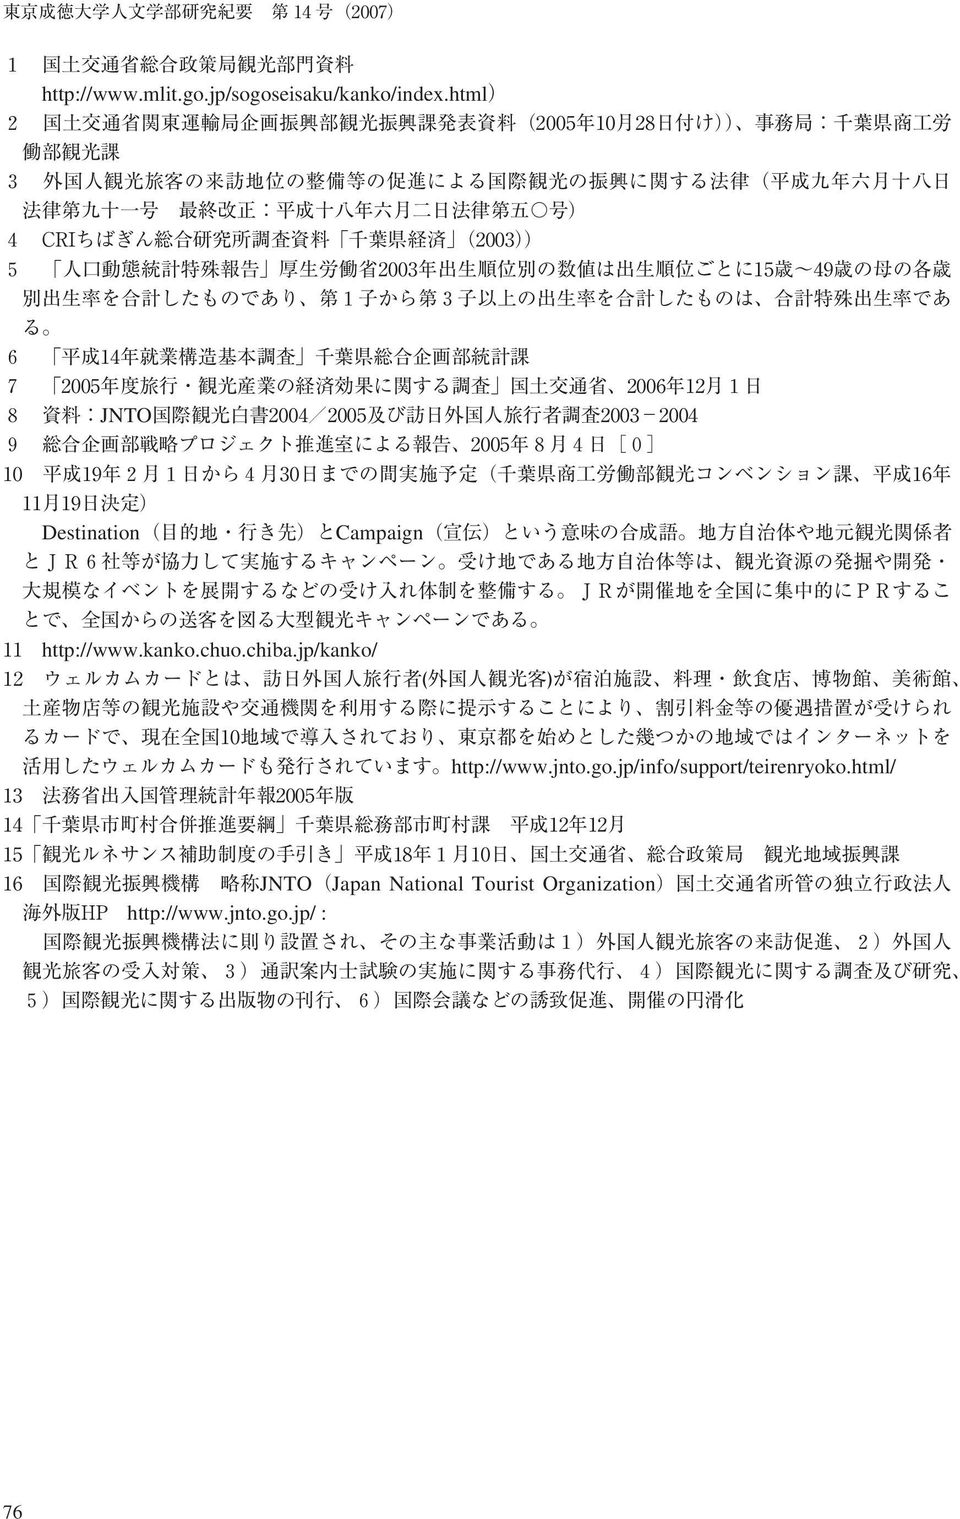 jp/kanko/ http://www.jnto.go.jp/info/support/teirenryoko.